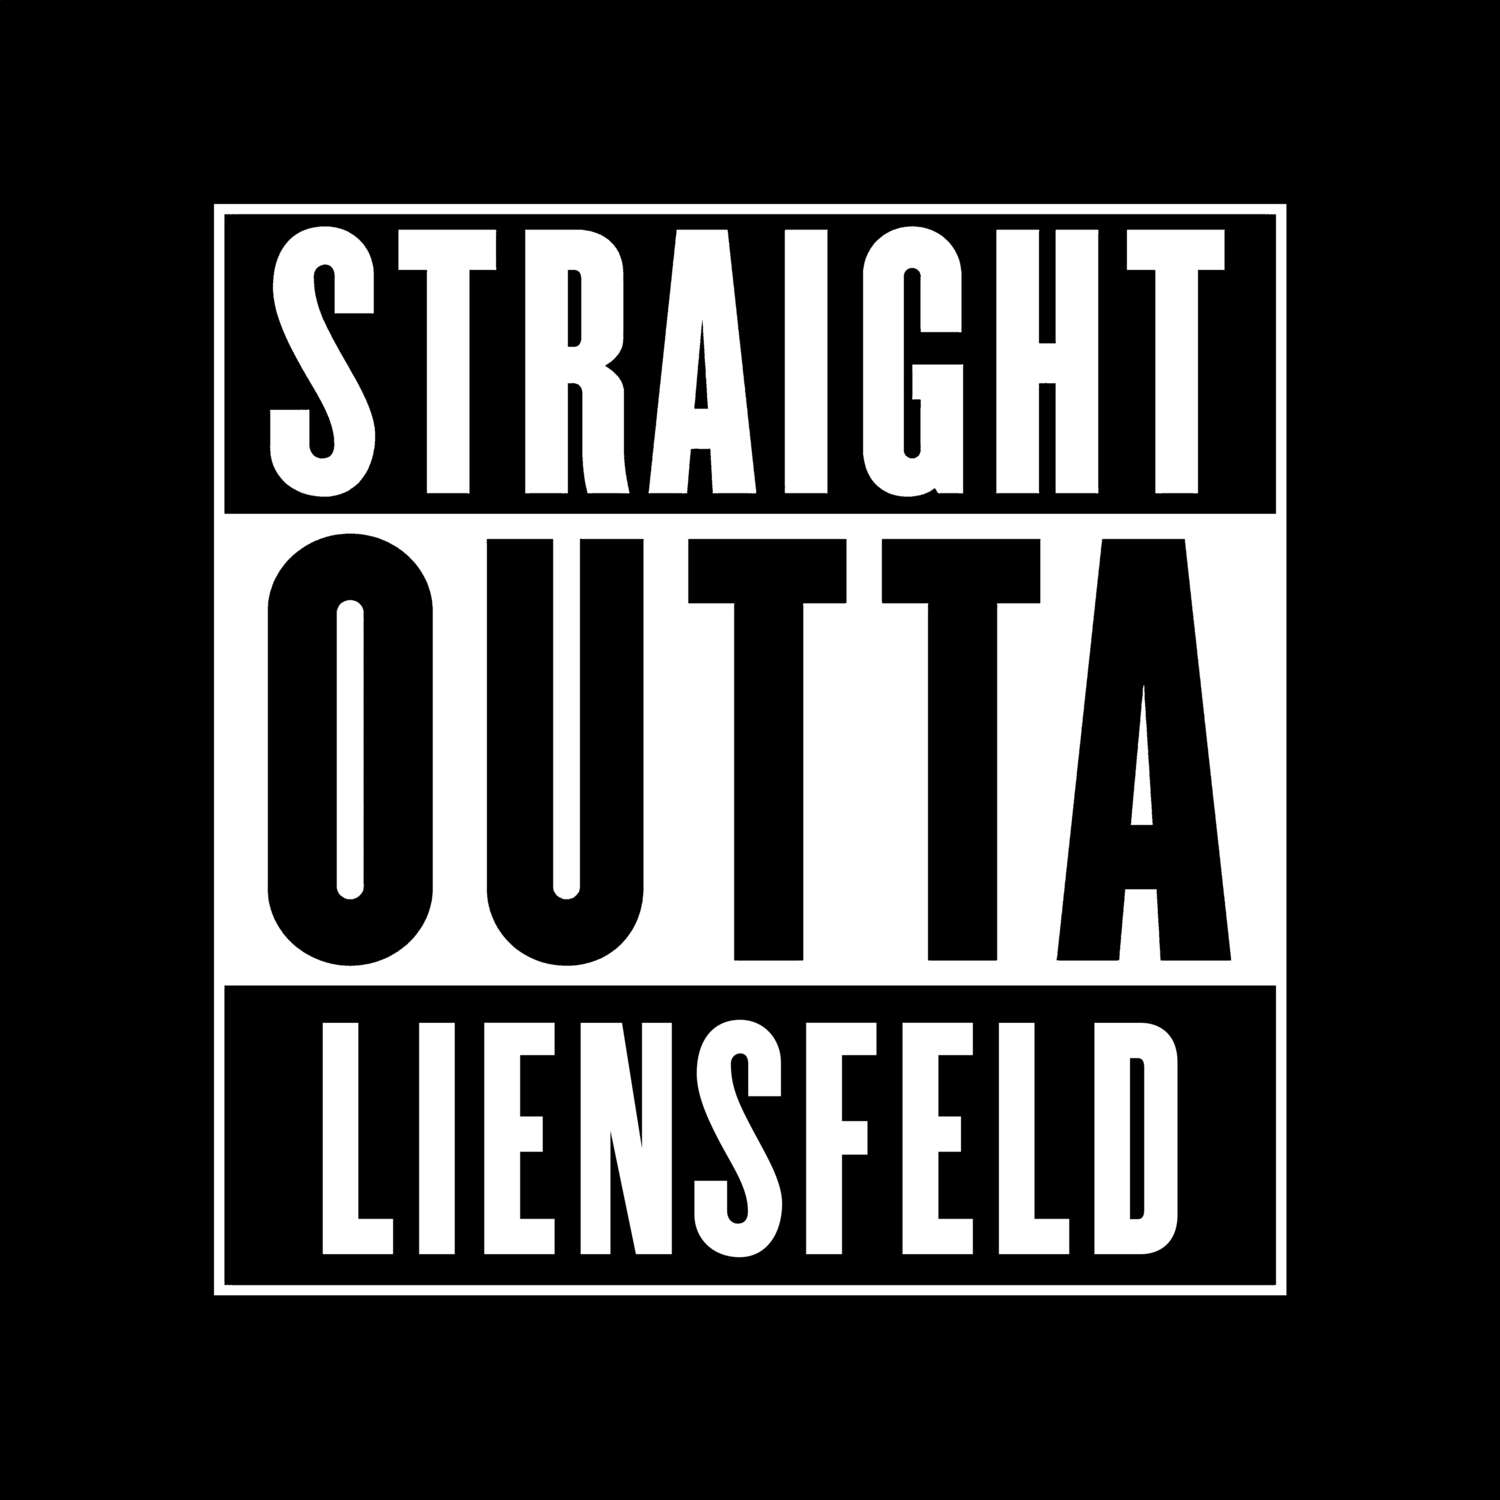 Liensfeld T-Shirt »Straight Outta«